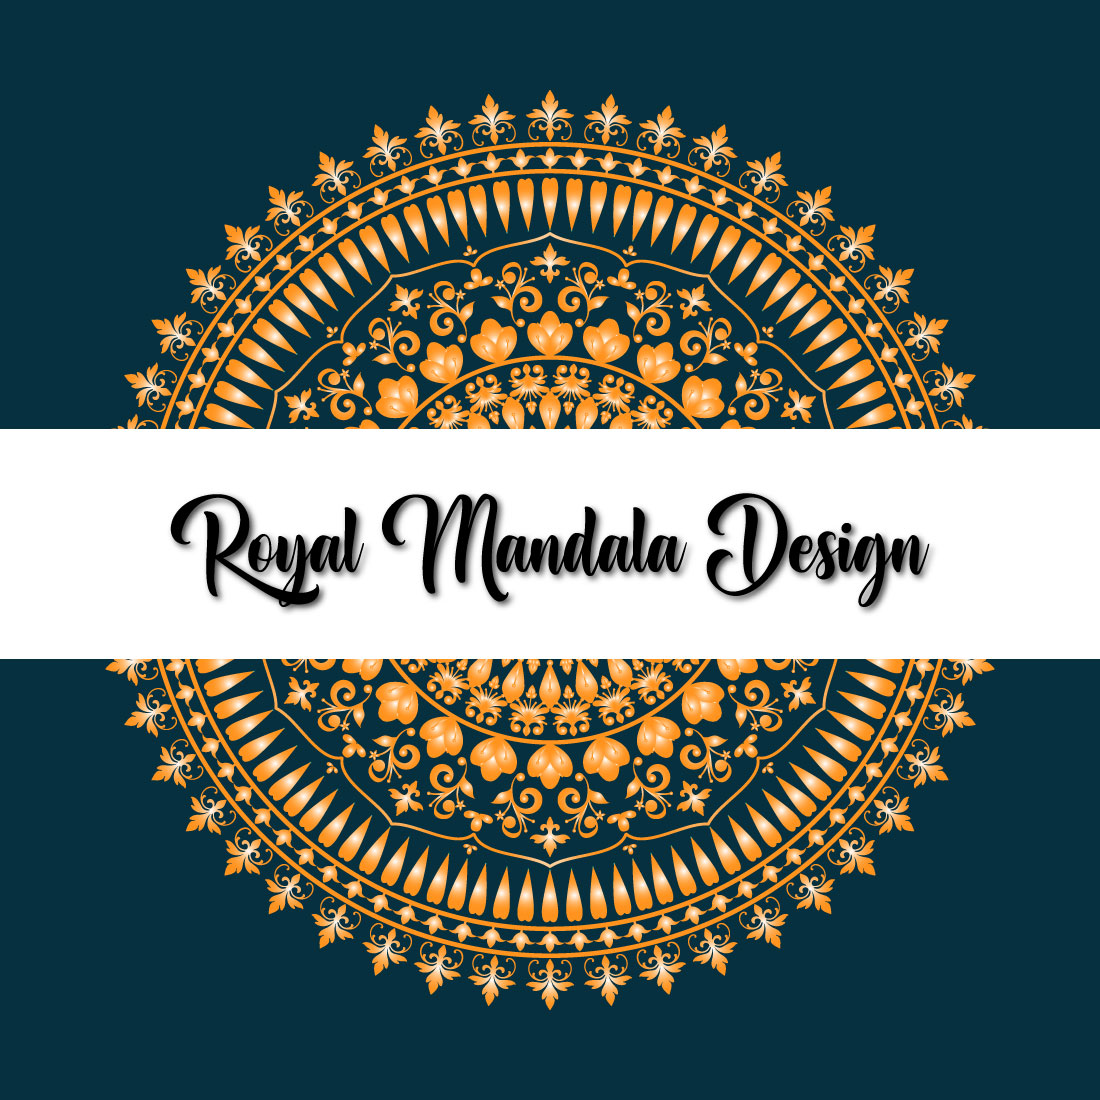 Exclusive Royal Mandala Design cover image.